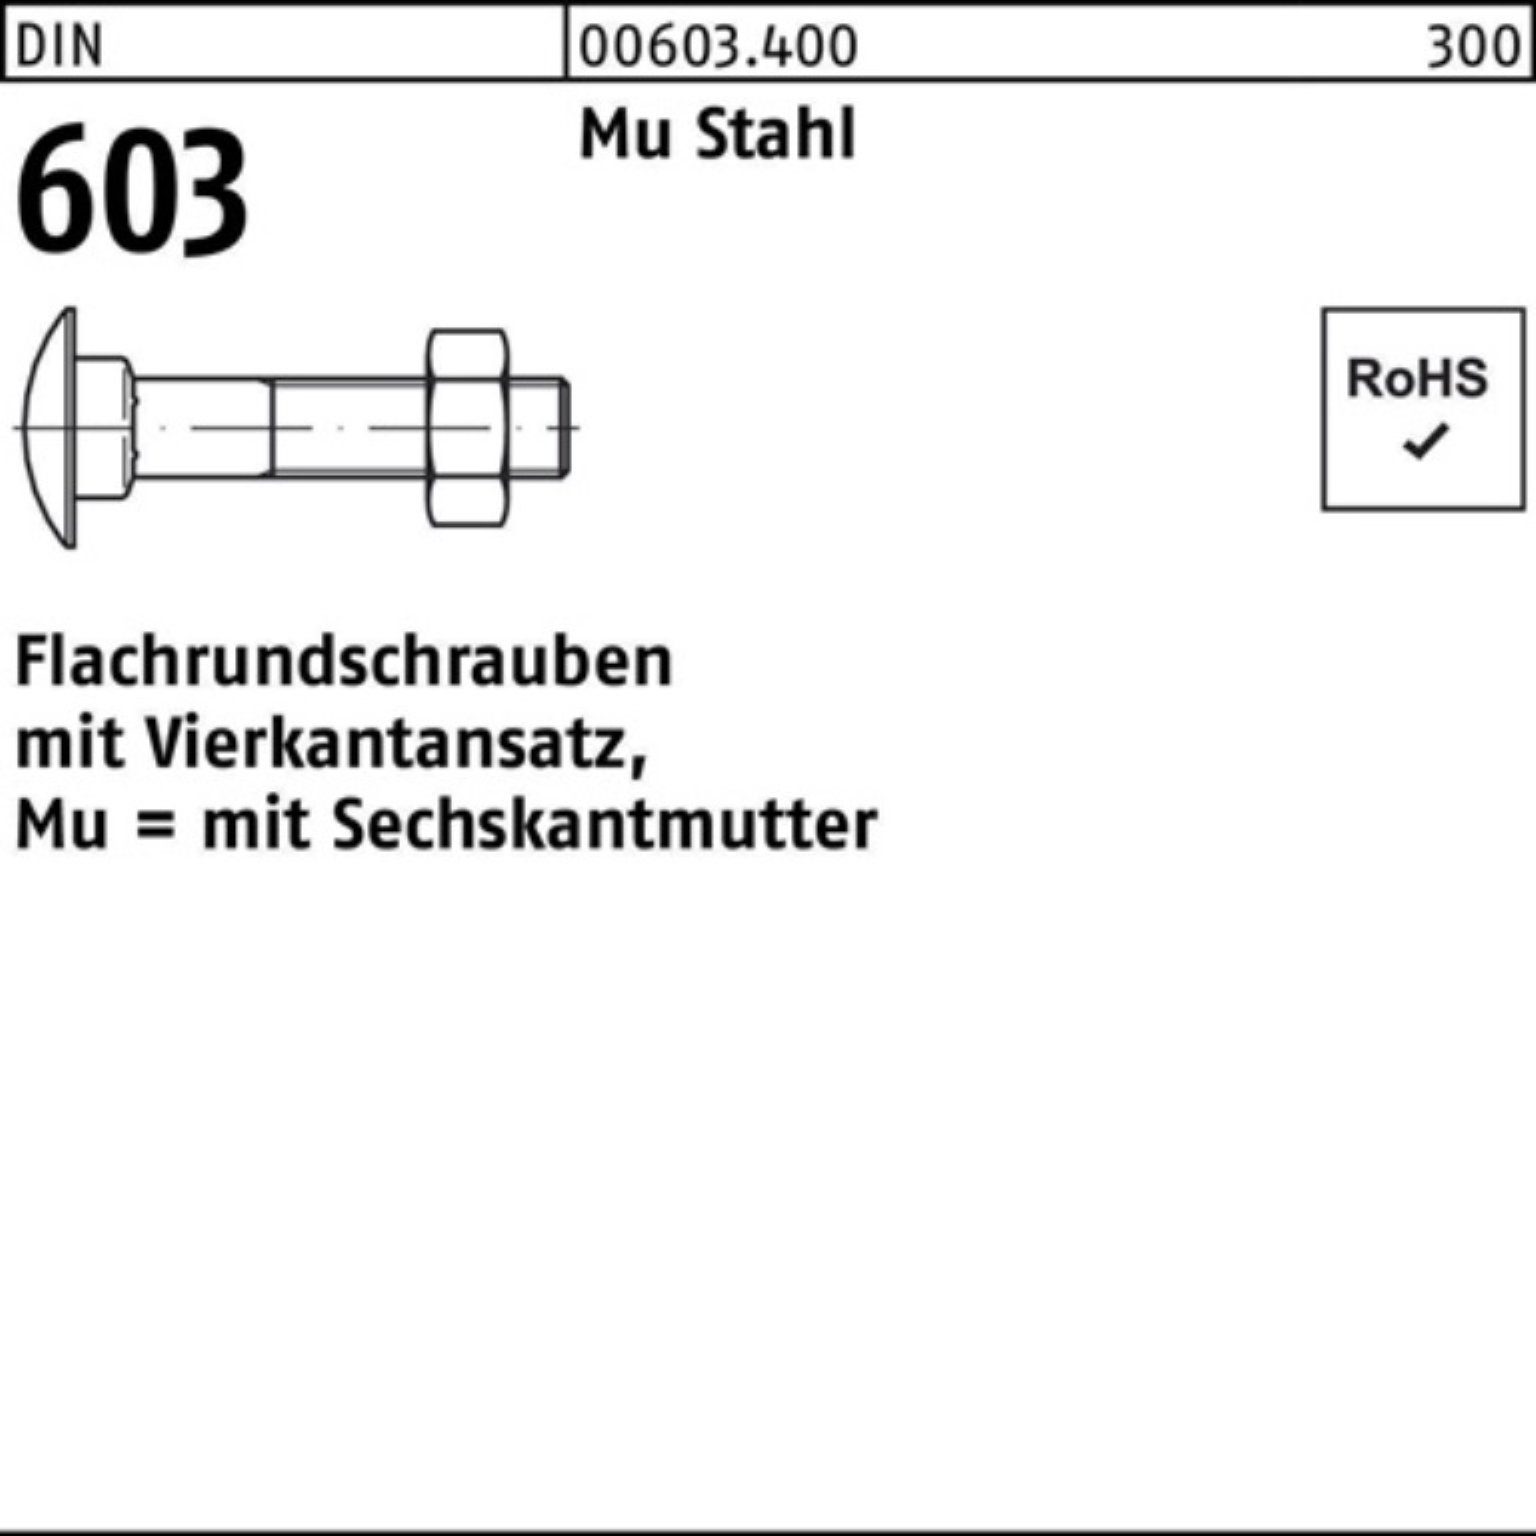 DIN M Flachrundschraube Schraube 603 Reyher 100er Pack M8x90 Vierkantansatz/6-ktmutter